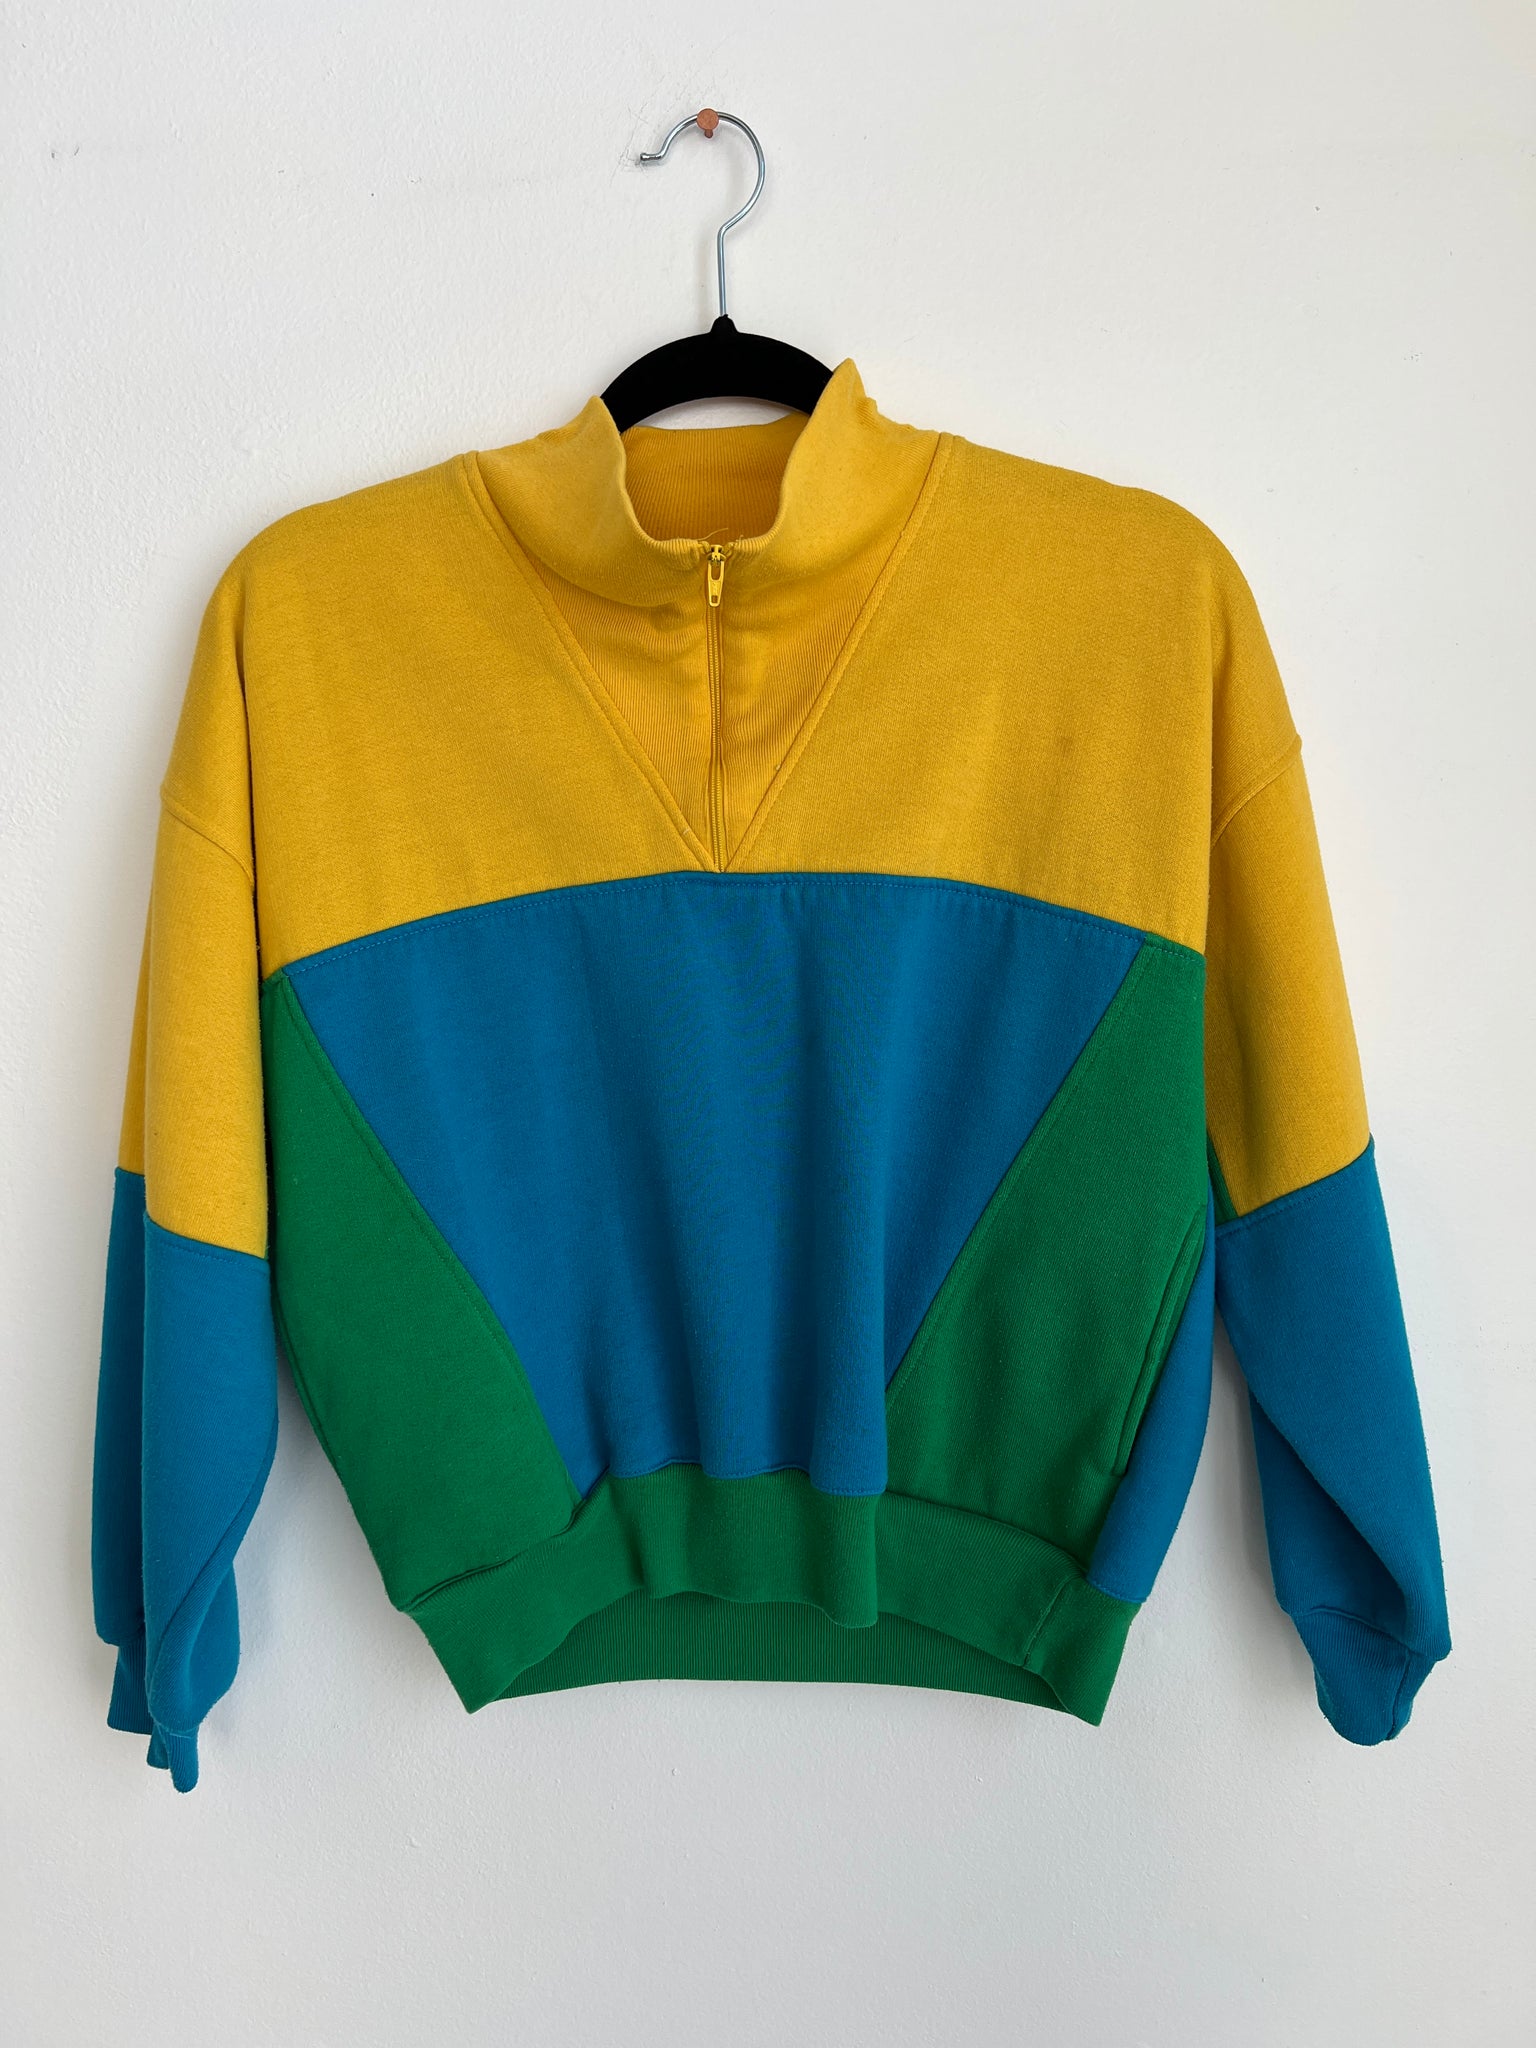 1980s TSHIRT- SWEATSHIRT- yellow/teal/green color block